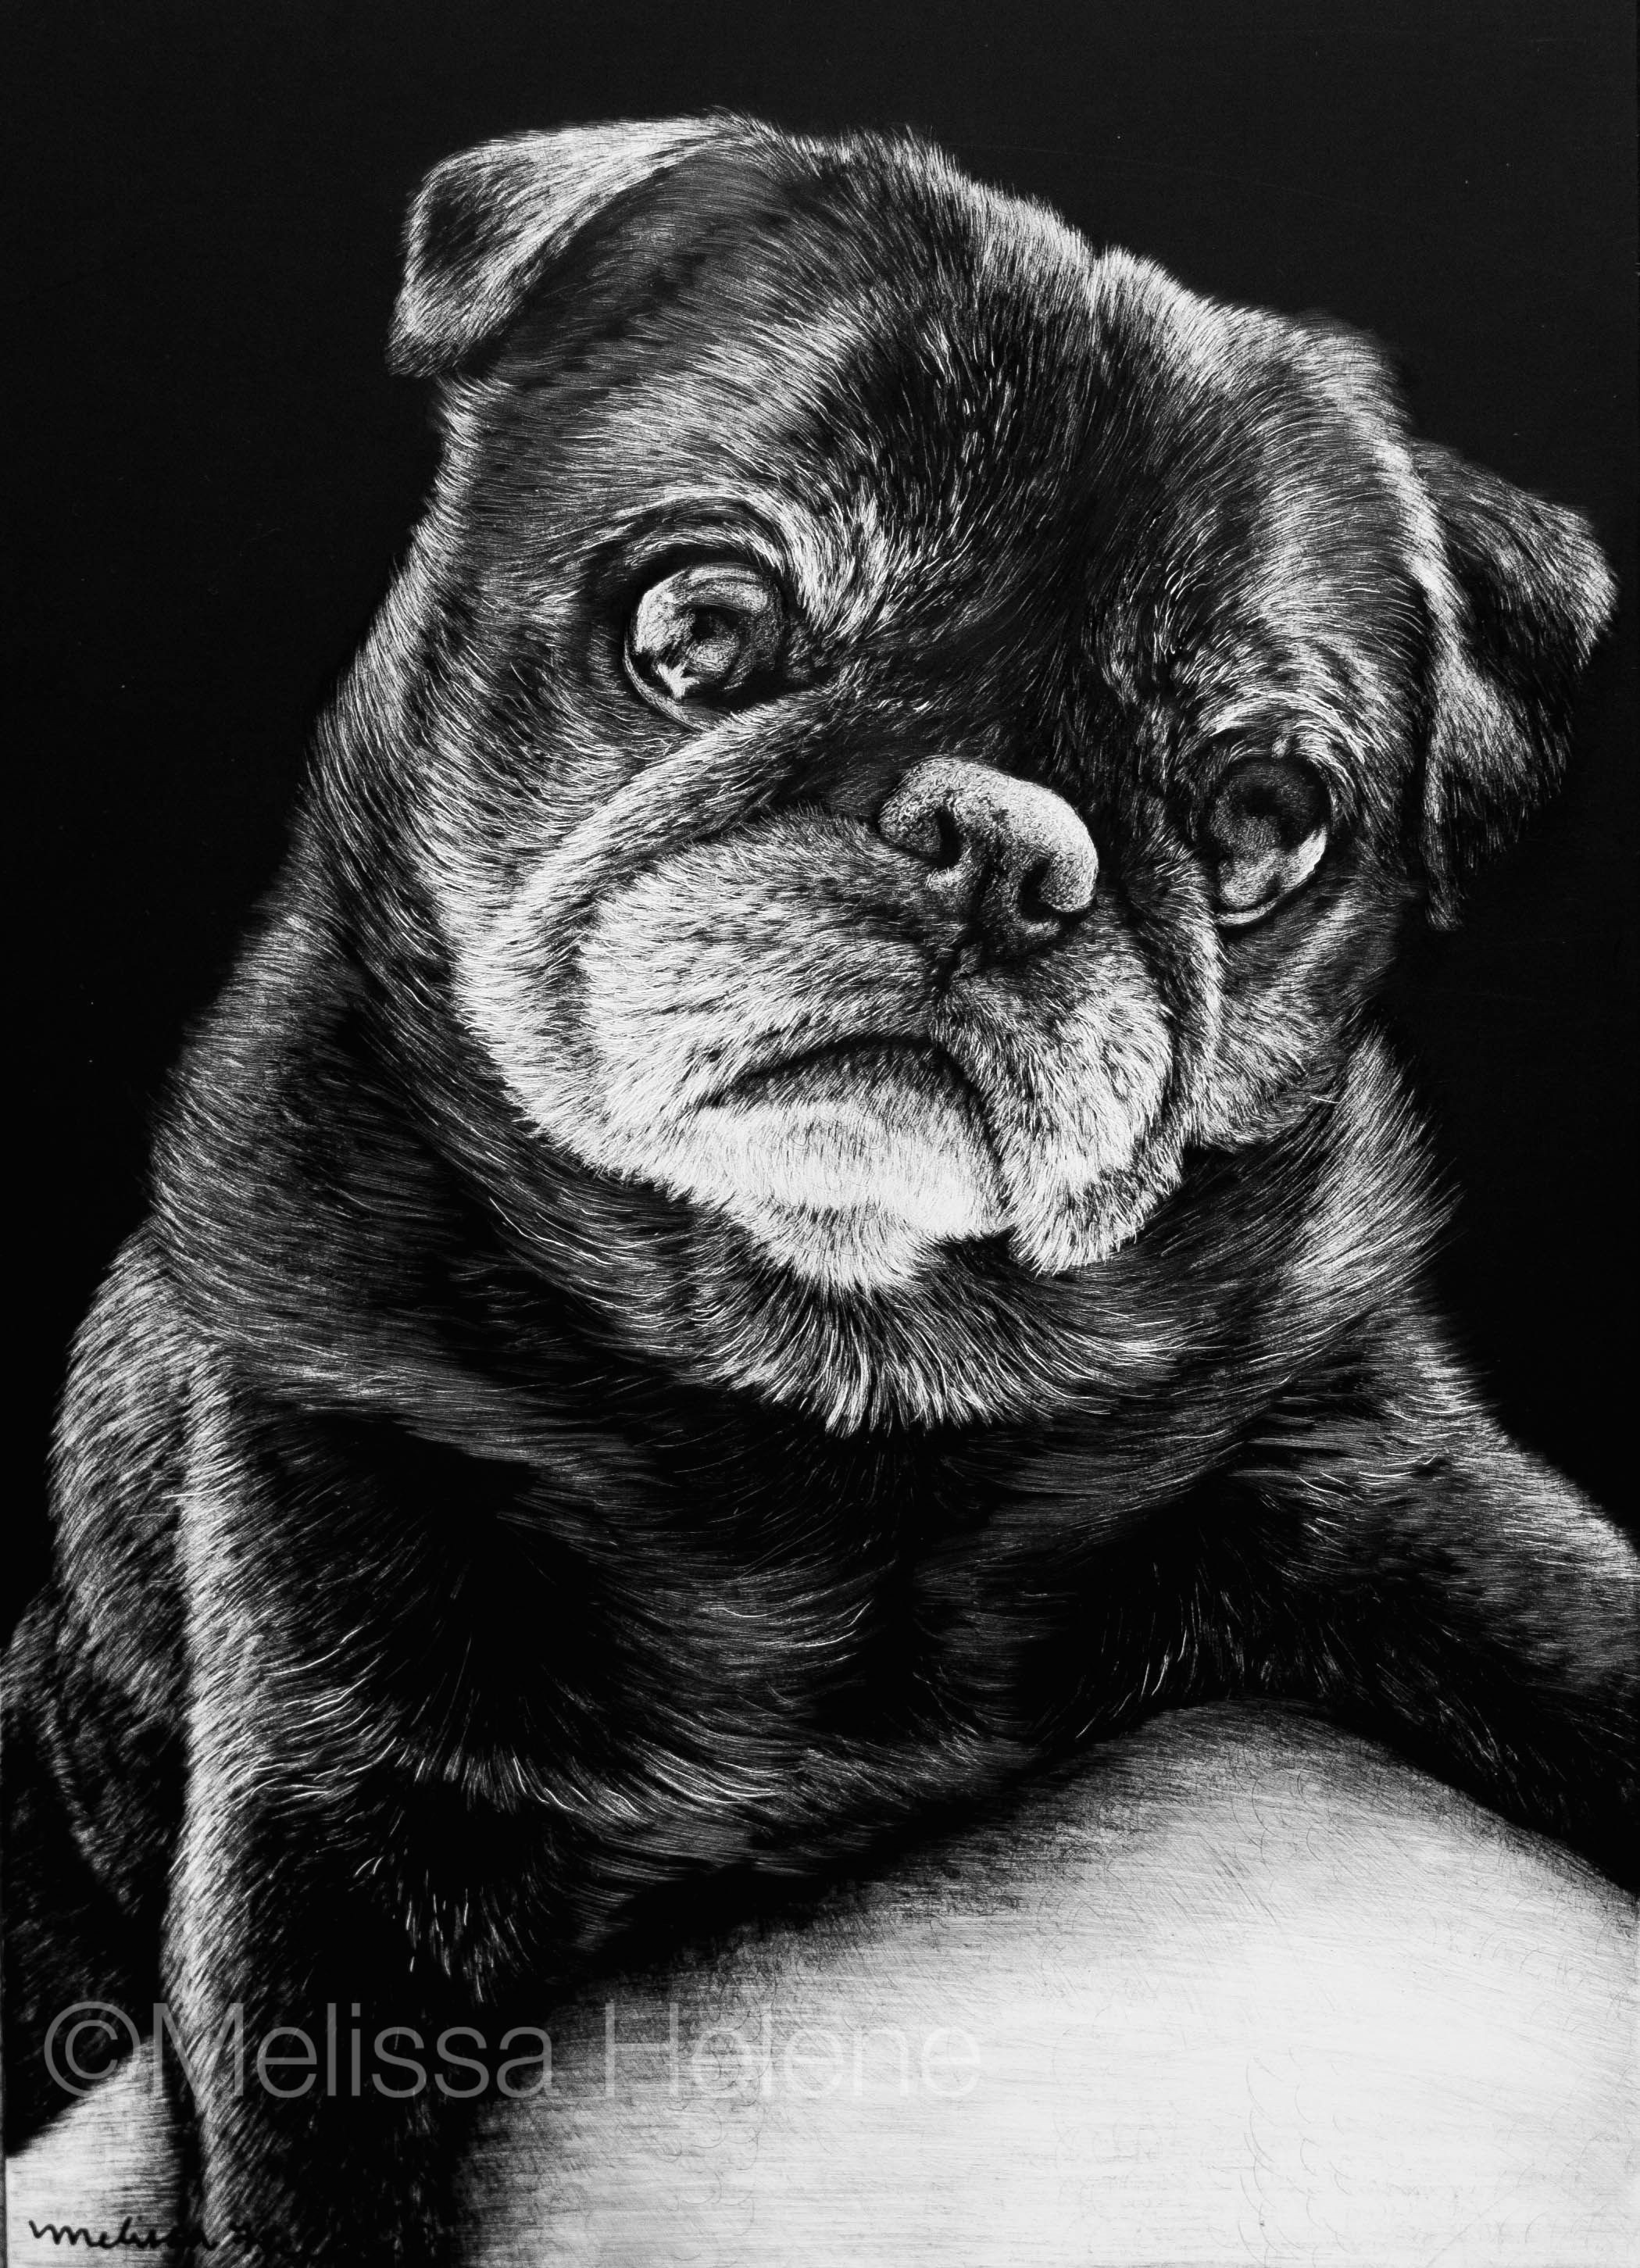 Dog Drawing Commission Zoey Melissa Helene Fine Arts Photography 5×7 Scratchboard Www